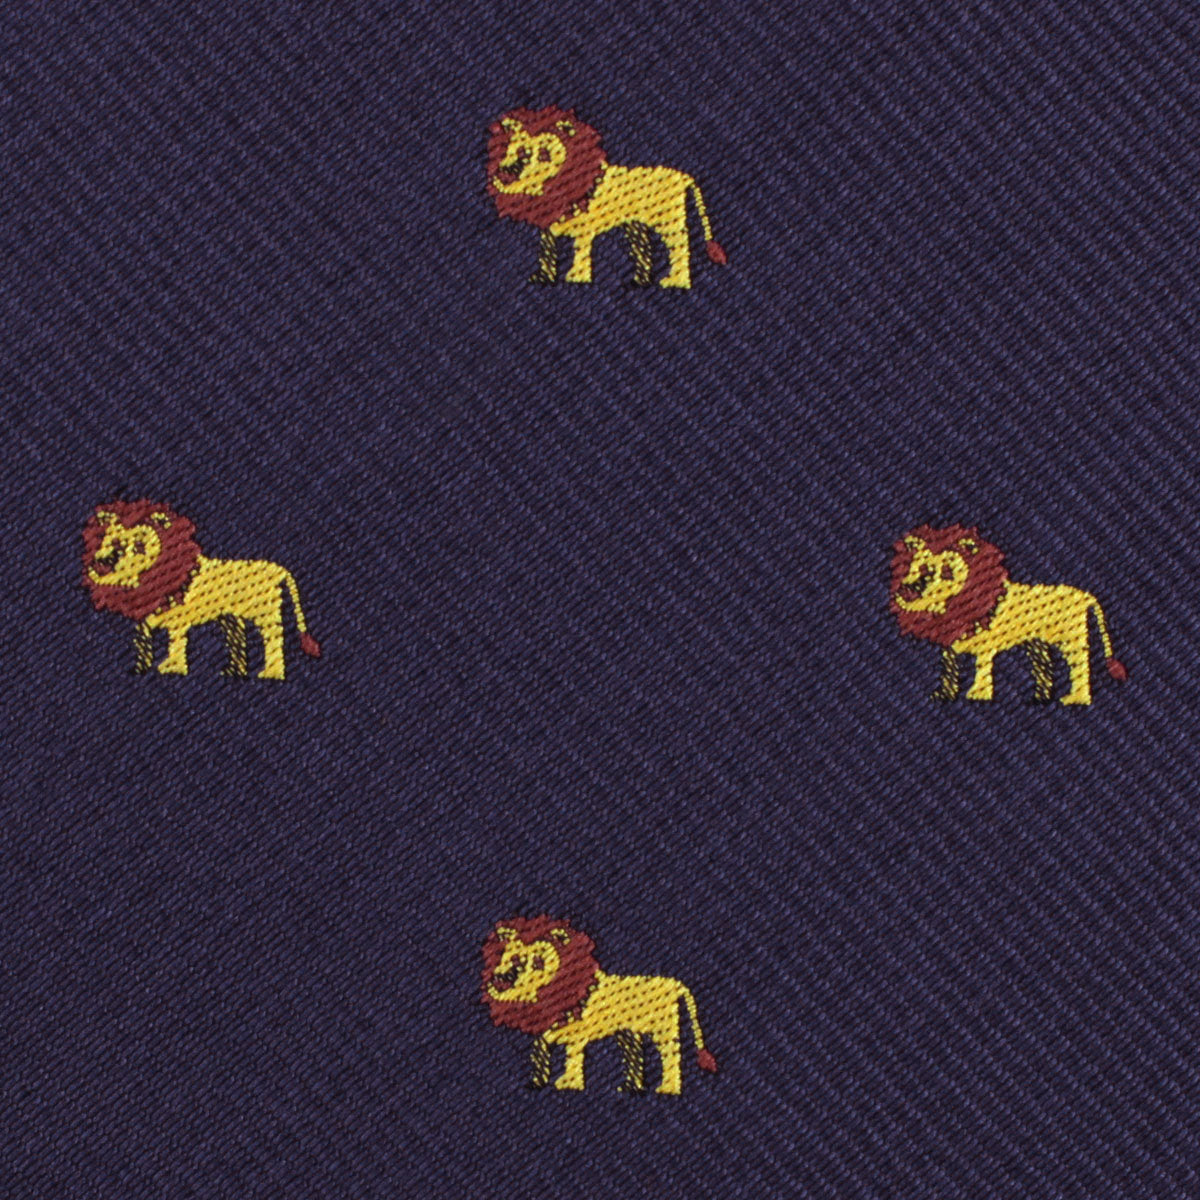 African Lion Fabric Self Diamond Bowtie